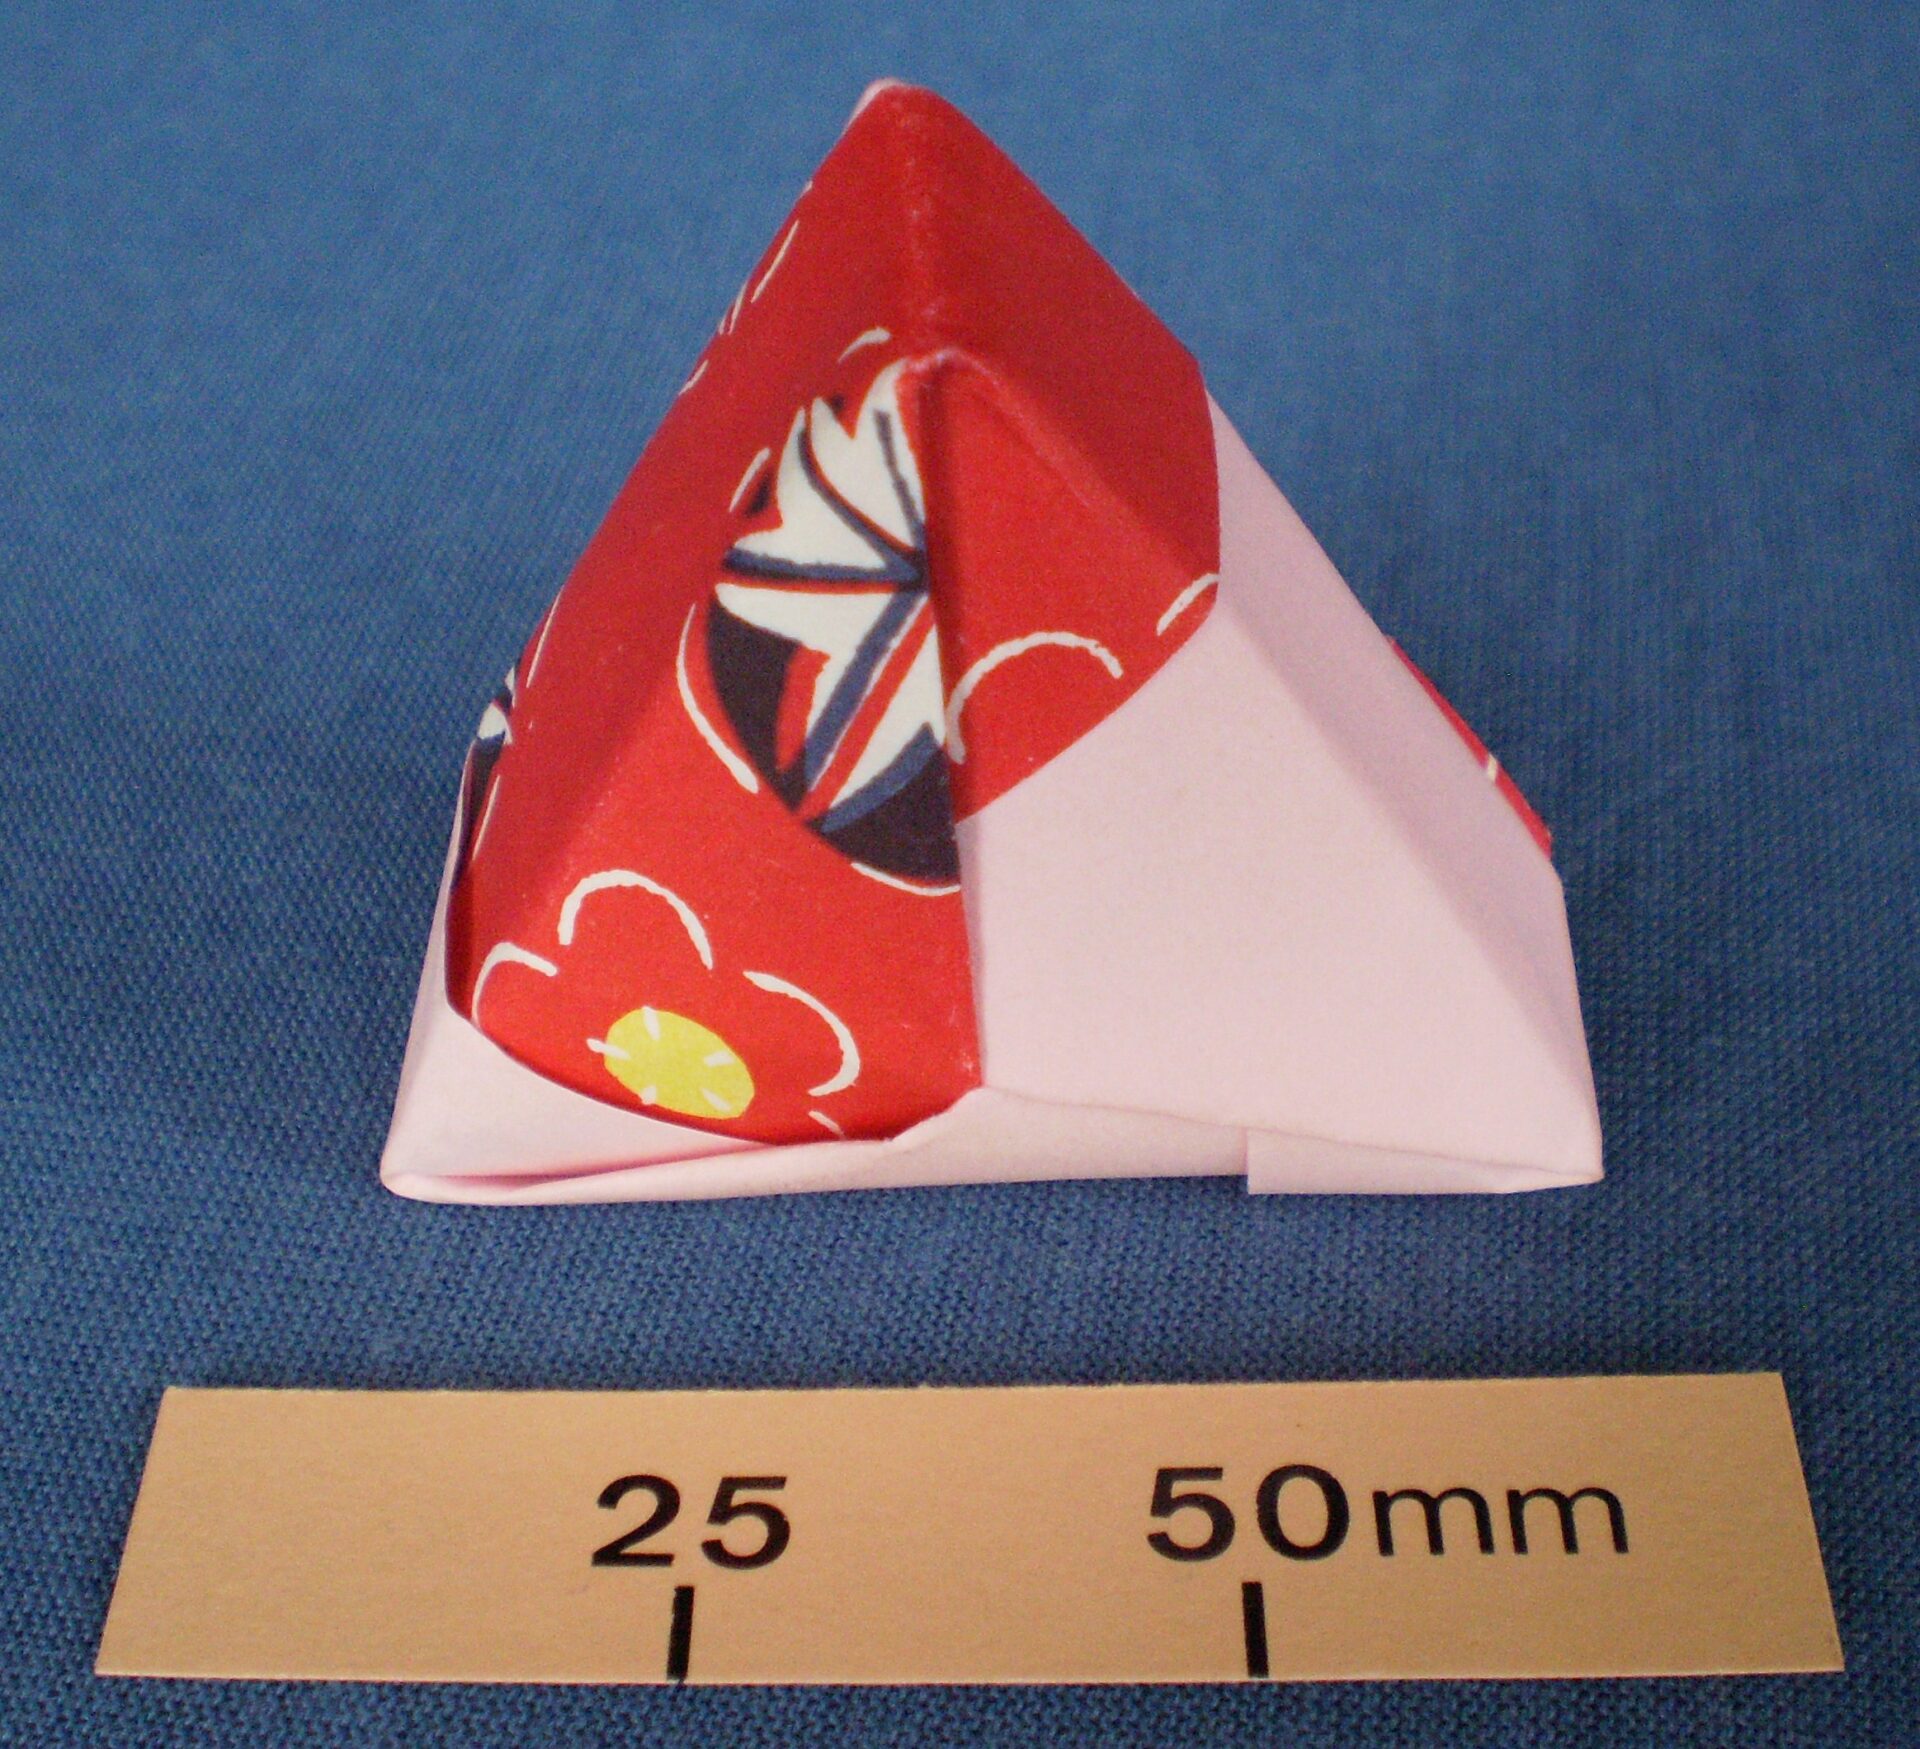 Origami triangular box